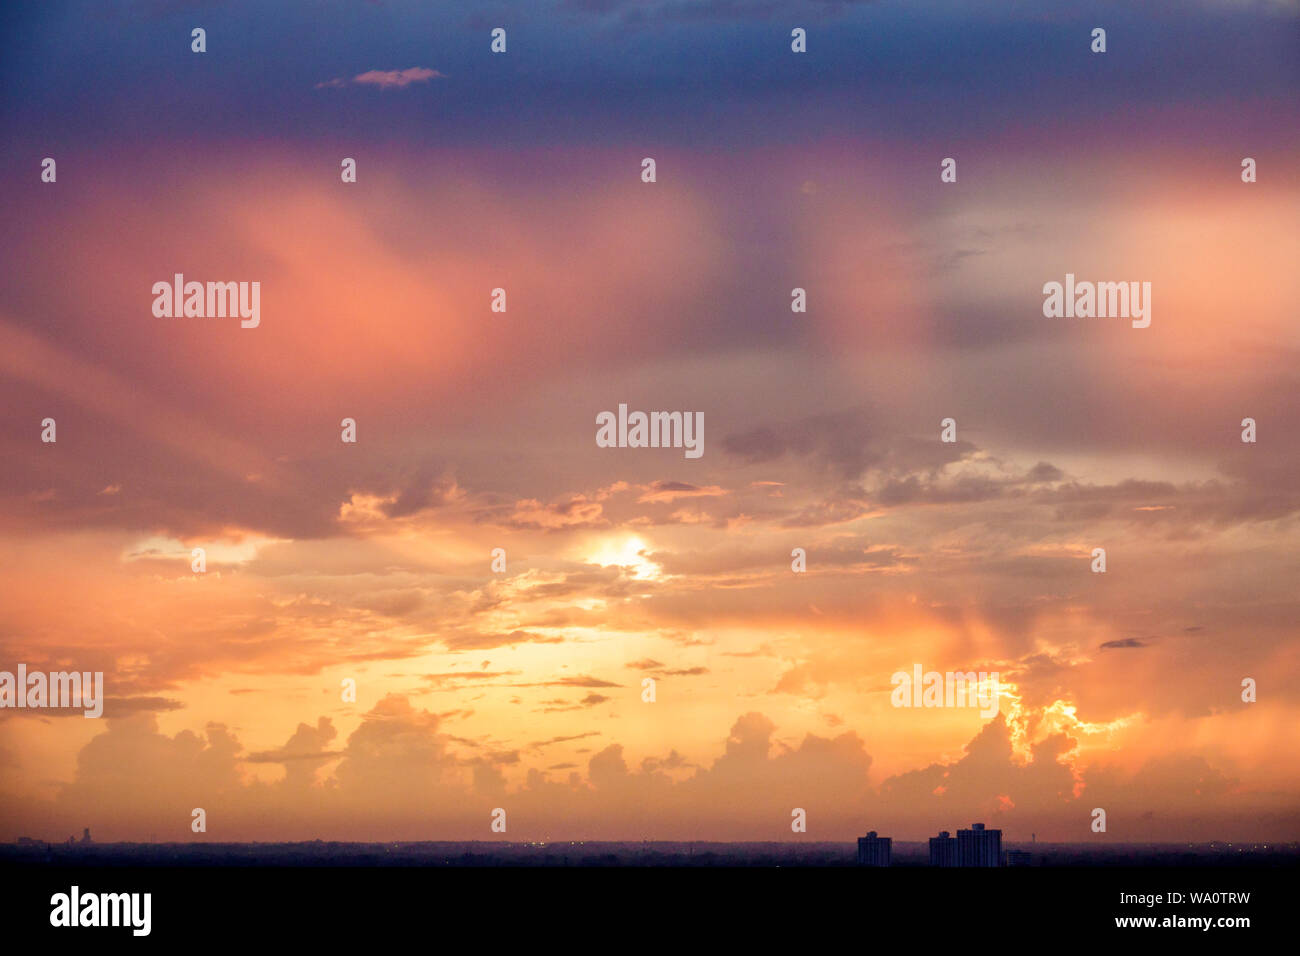 Miami Beach Florida,clouds sunset sky weather sunrays,FL190731043 Stock Photo